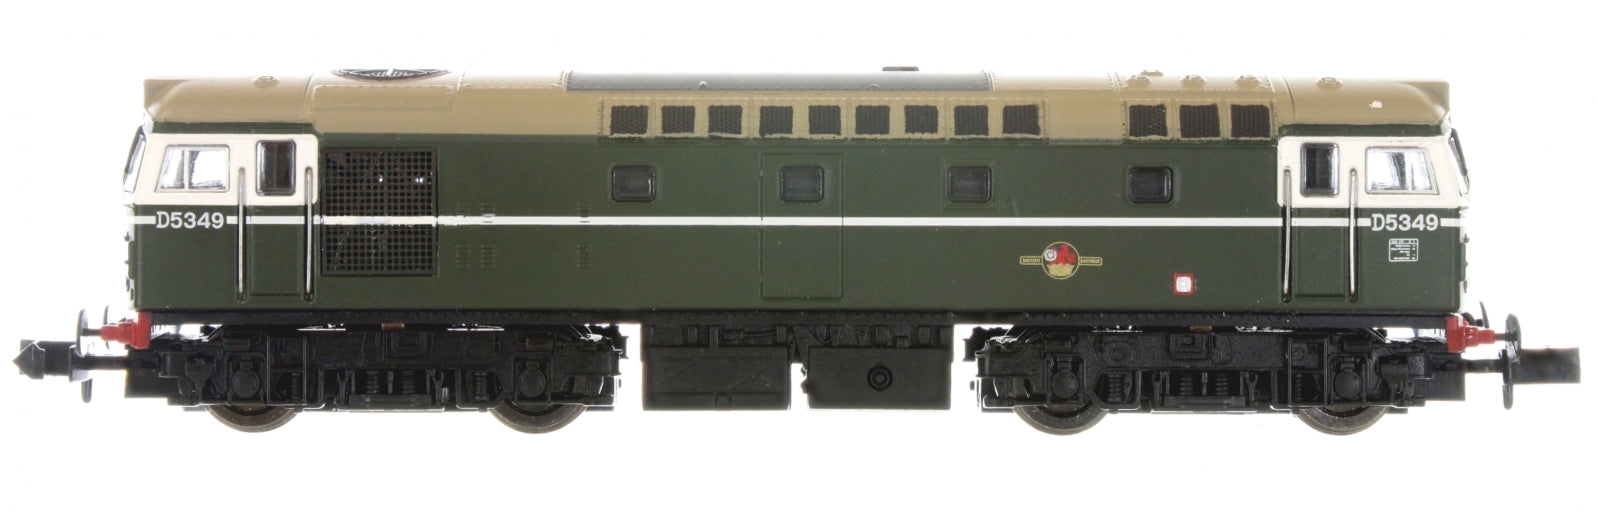 2D-013-002D N Gauge Class 27 D5349 BR Green DCC Fitted